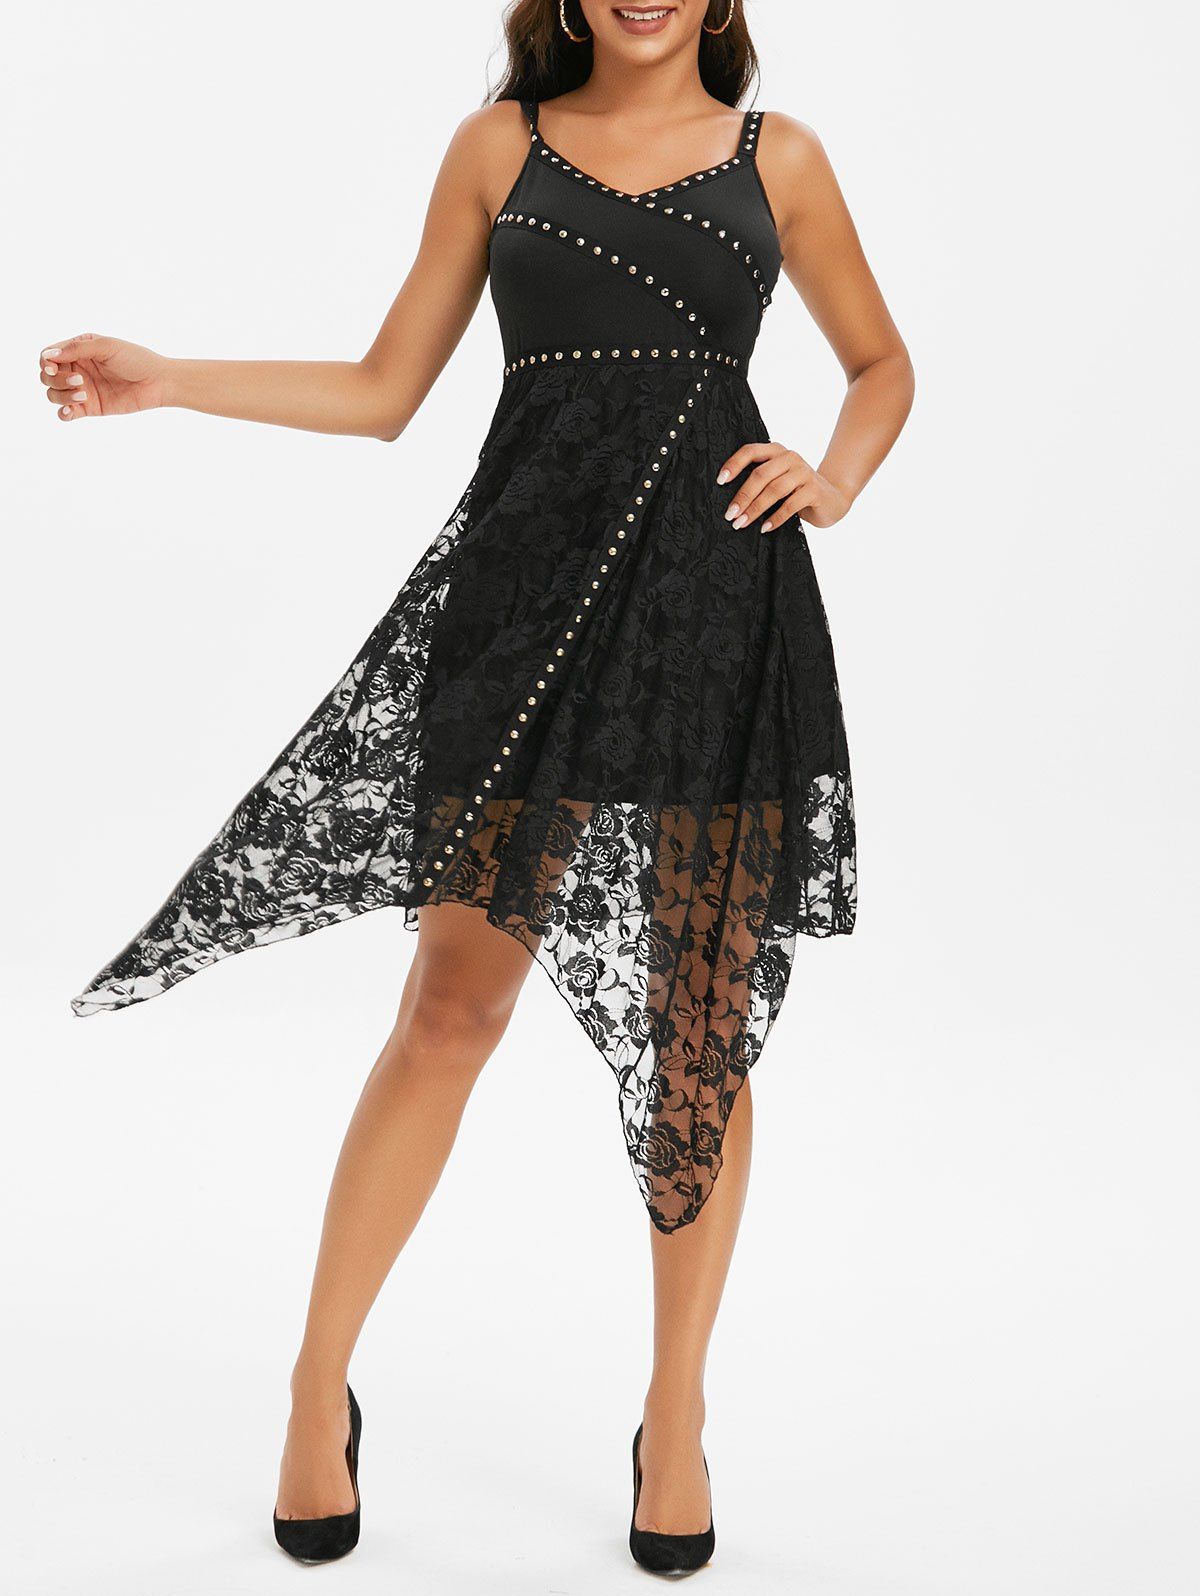 Rivets Lace Overlay Asymmetrical Dress - BLACK XXL